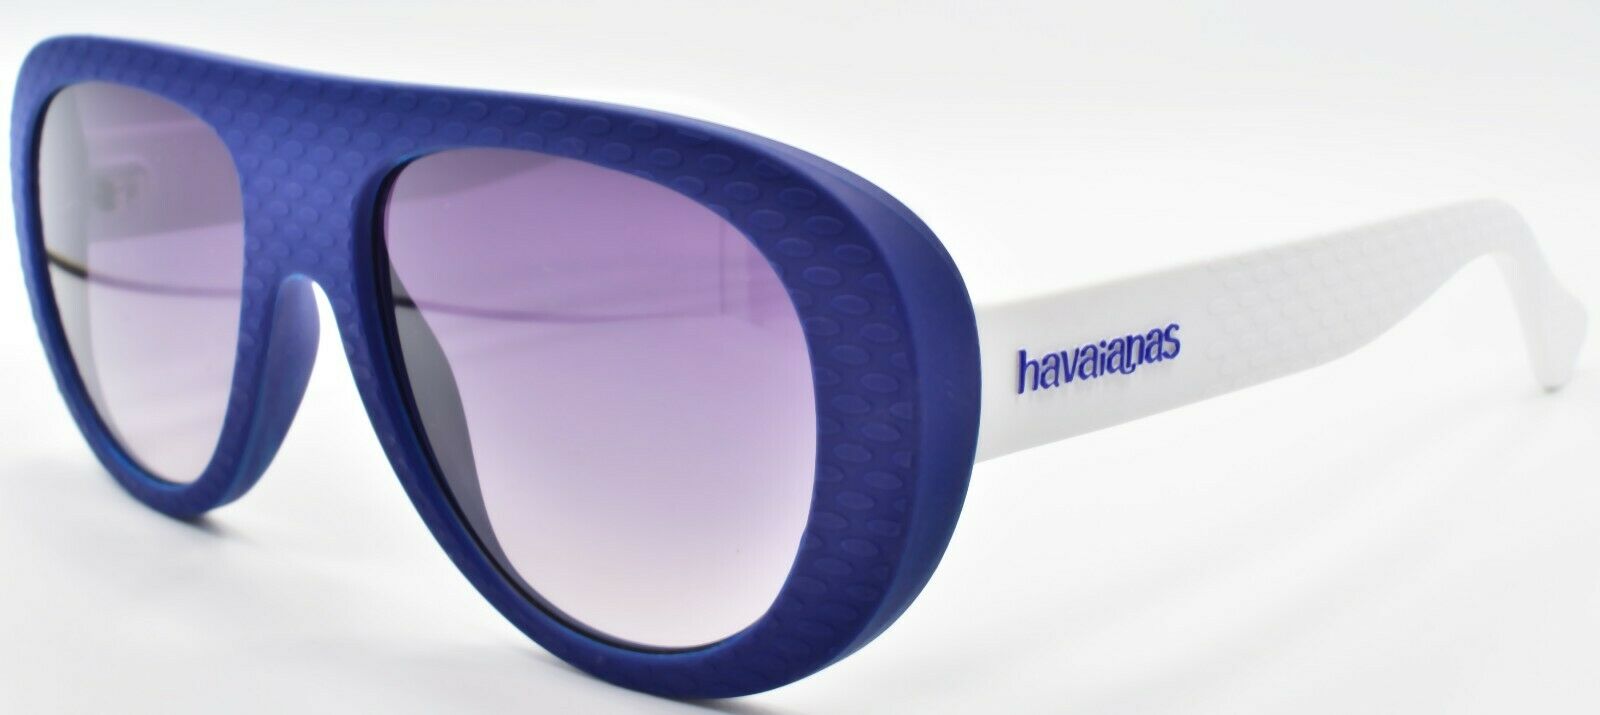 1-Havaianas RIO /M QMBLS Sunglasses 54-18-145 Blue White / Smoke Gradient-762753124807-IKSpecs